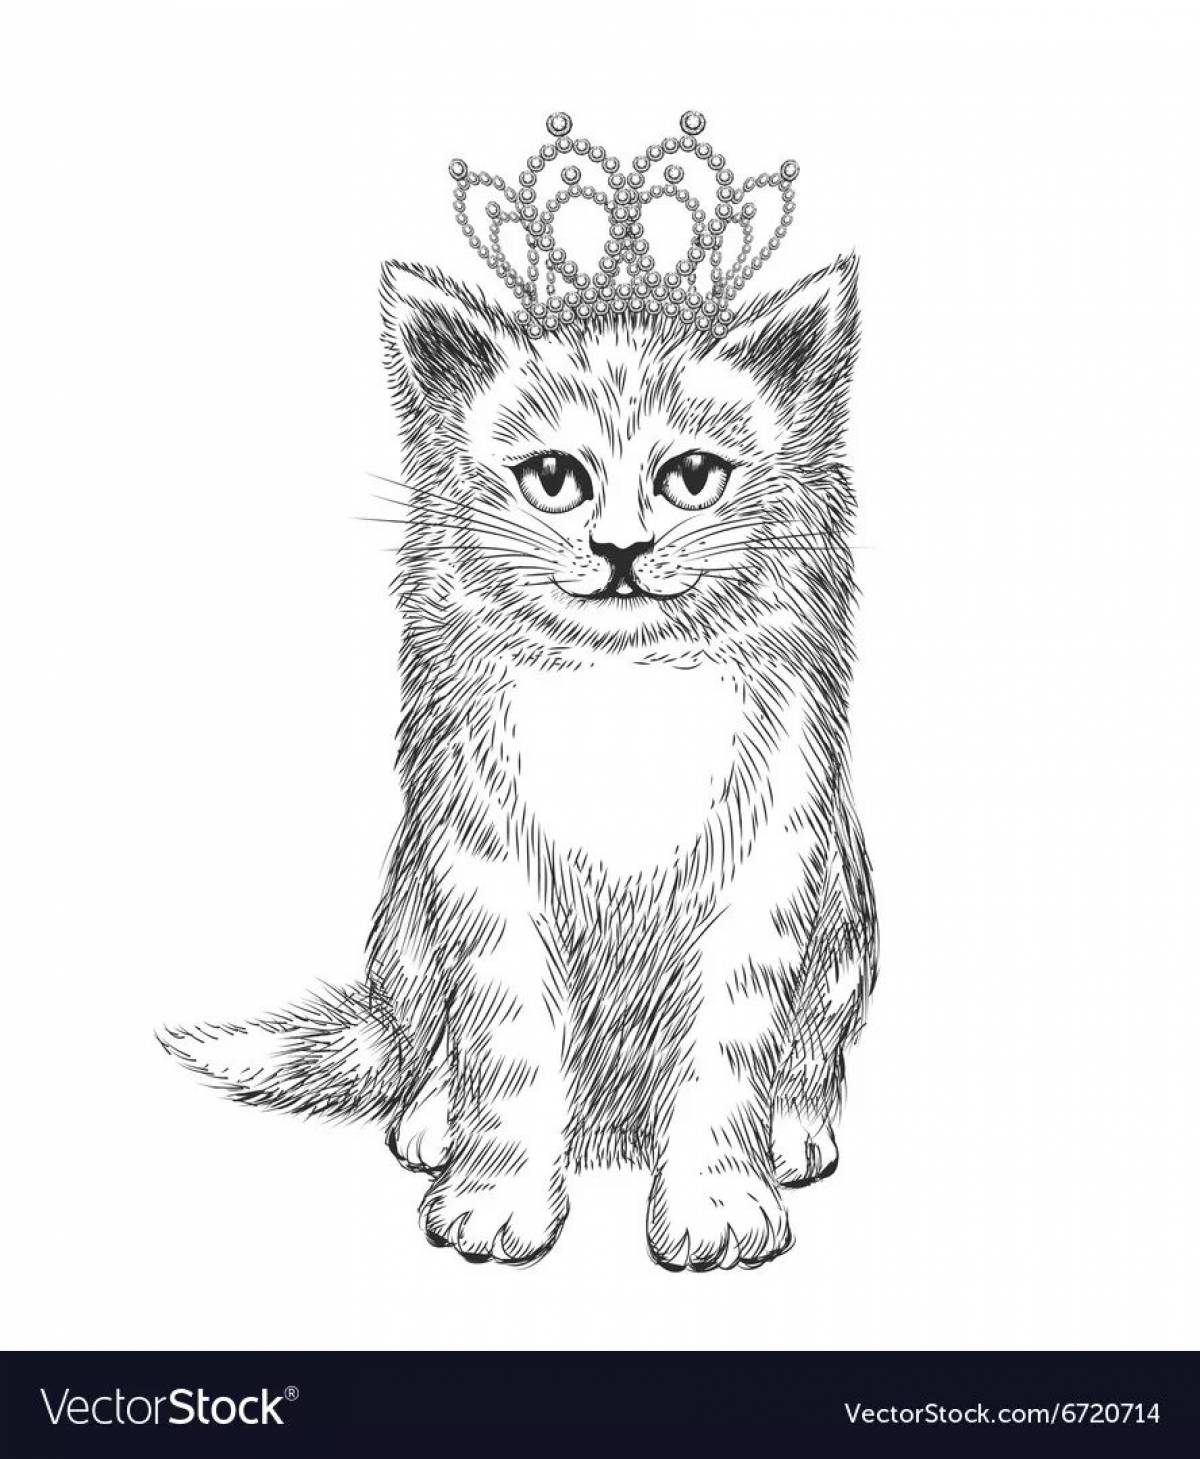 Crown cat #20